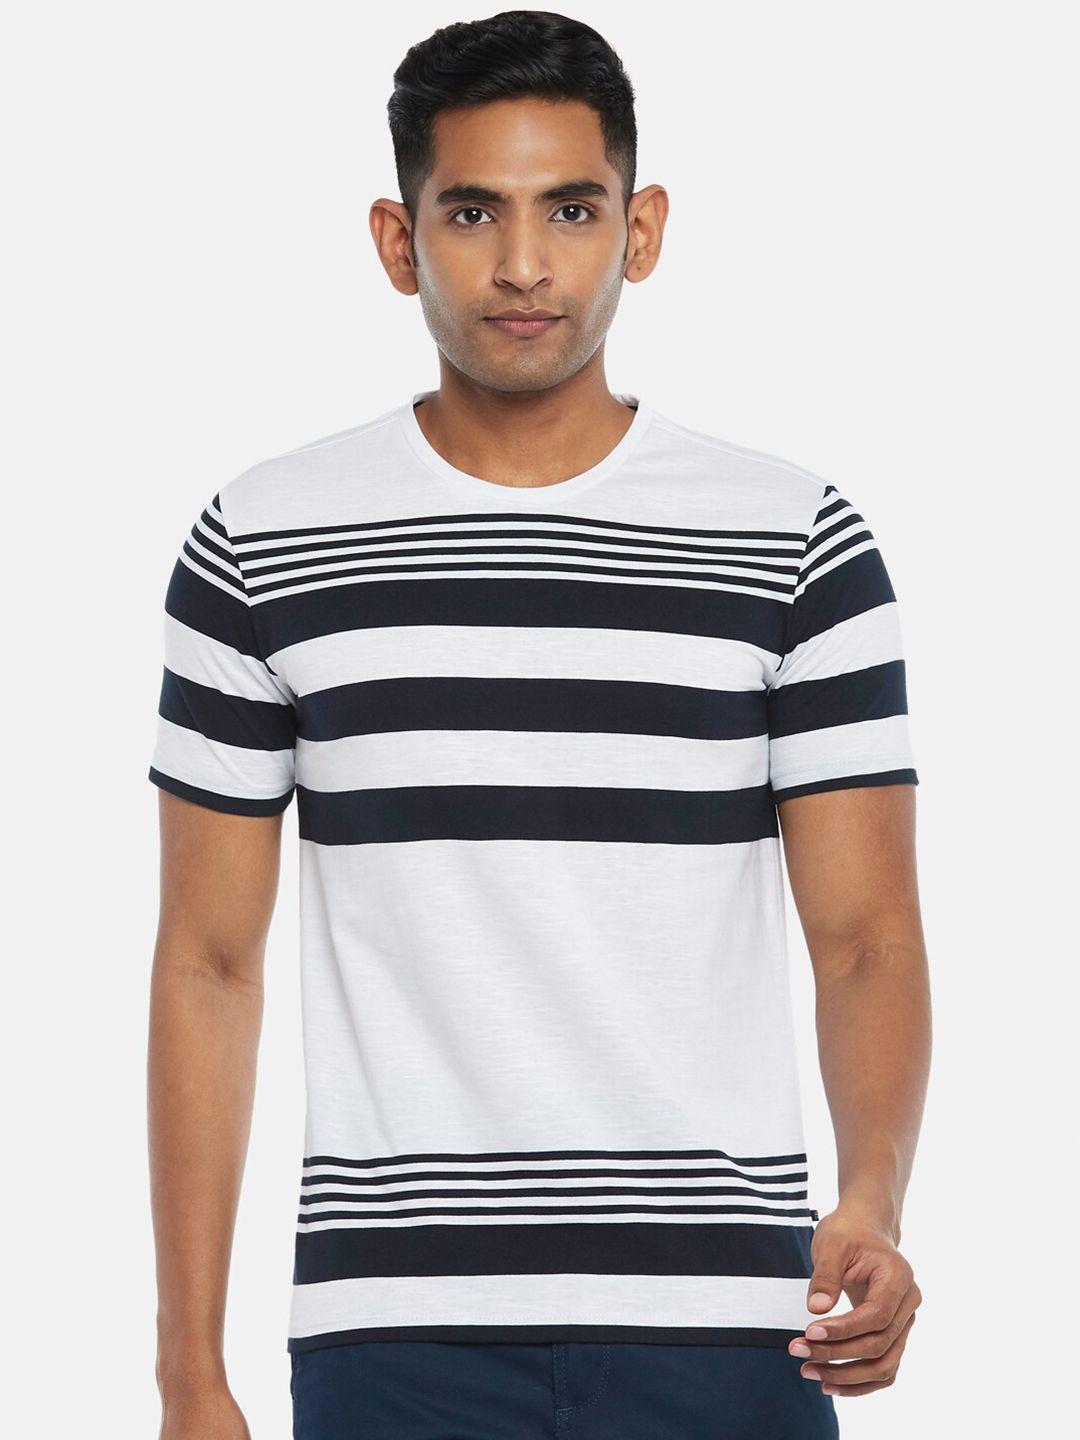 urban ranger by pantaloons men white striped slim fit t-shirt